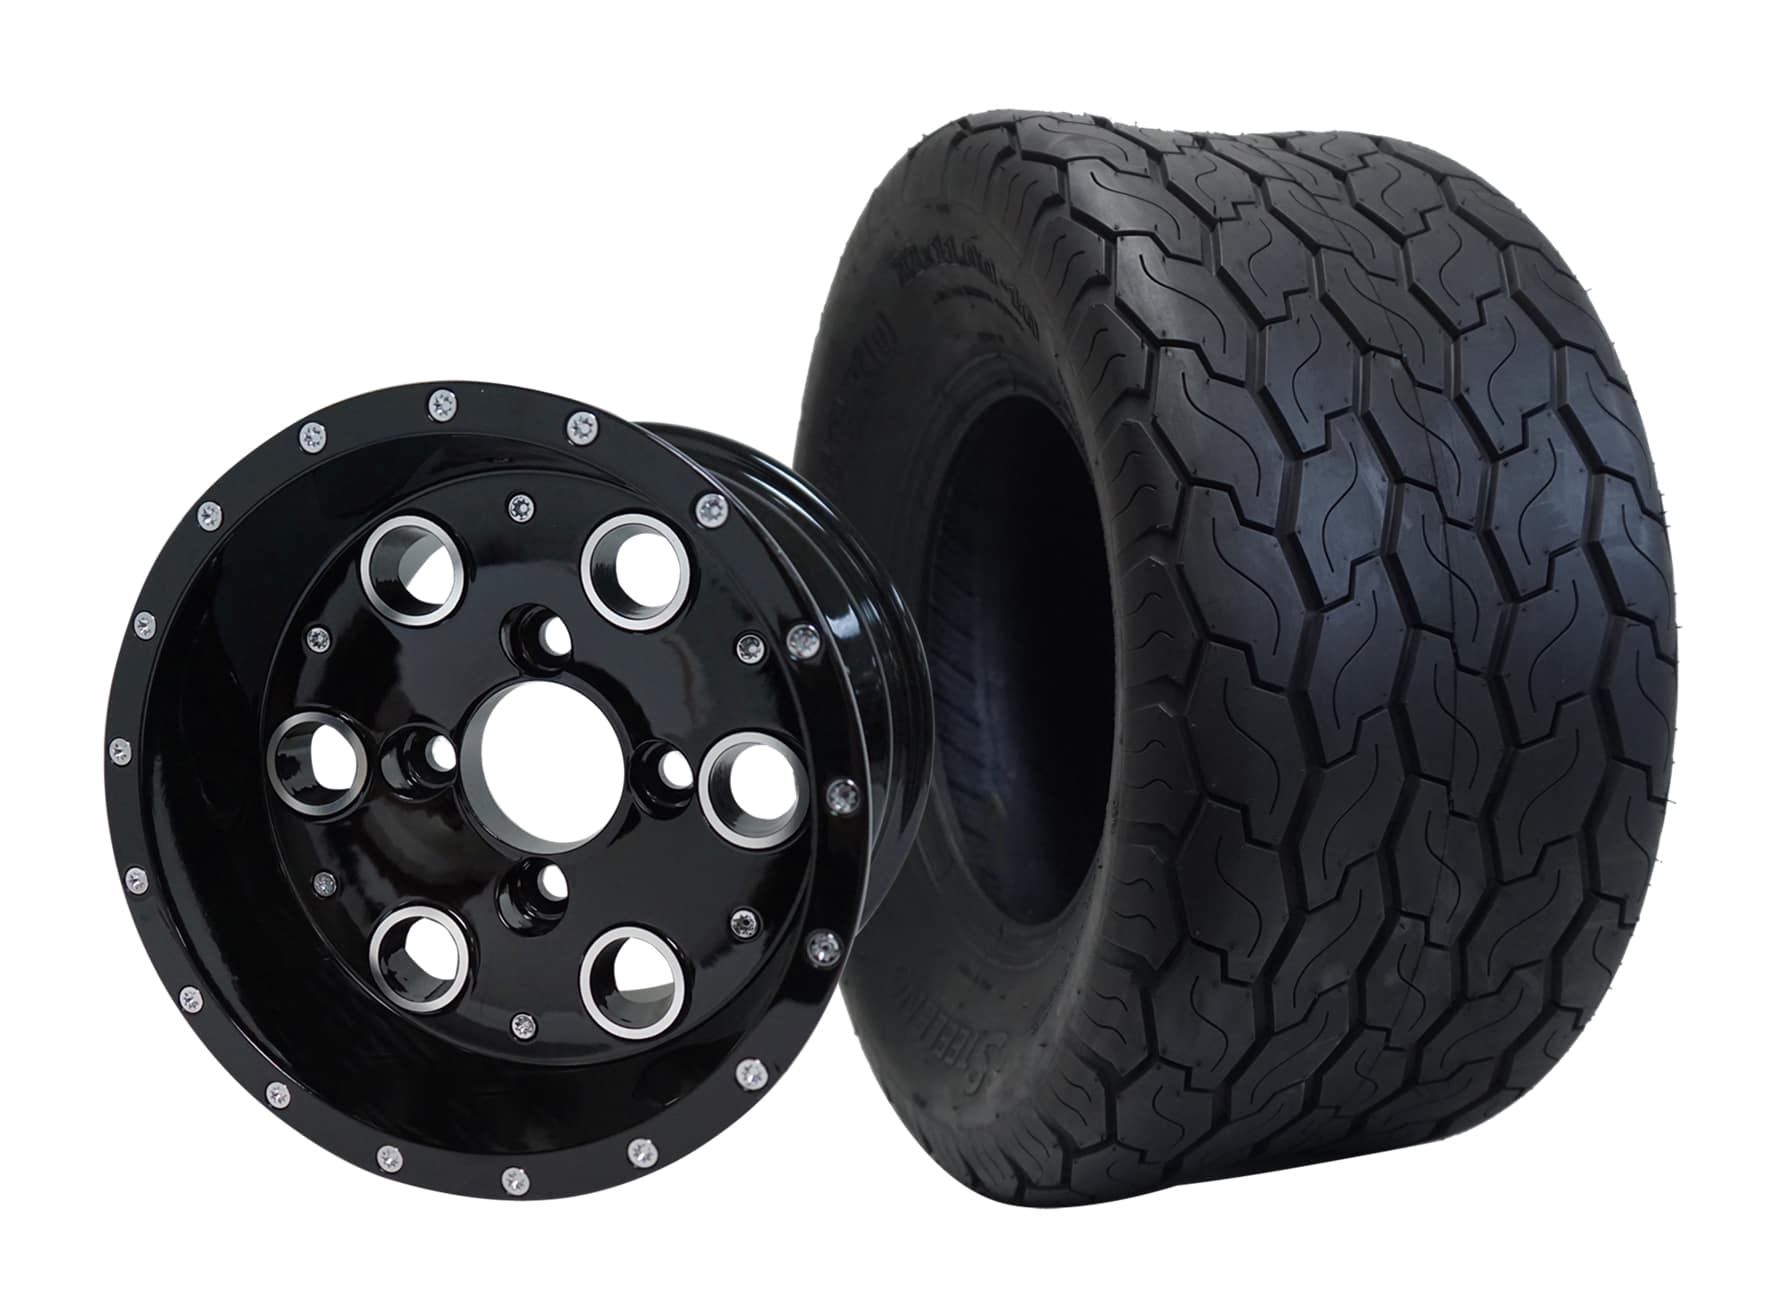 10" Pioneer Glossy Black Wheel Aluminum Alloy & 18"x9"-10" Gecko All Terrain Tire x4